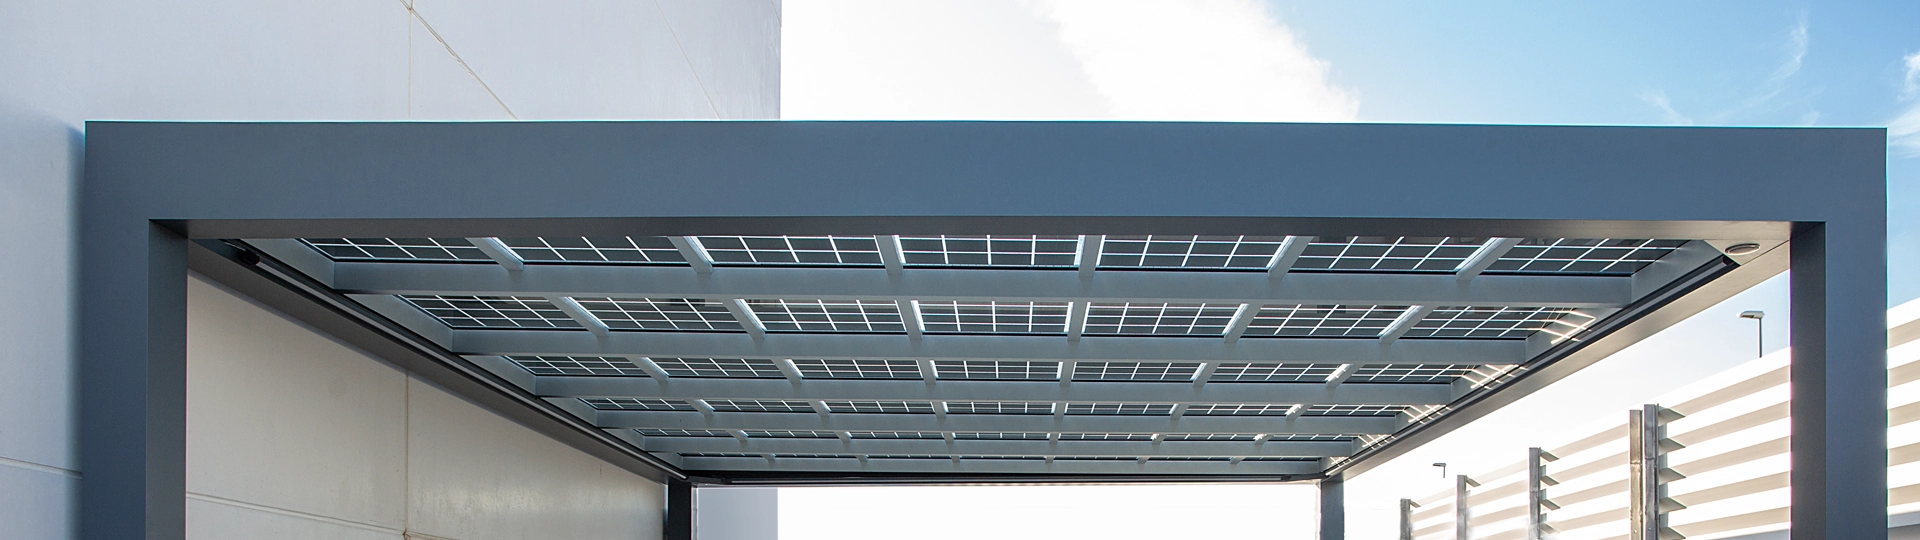 instalar pergola fotovoltaica en terrazas